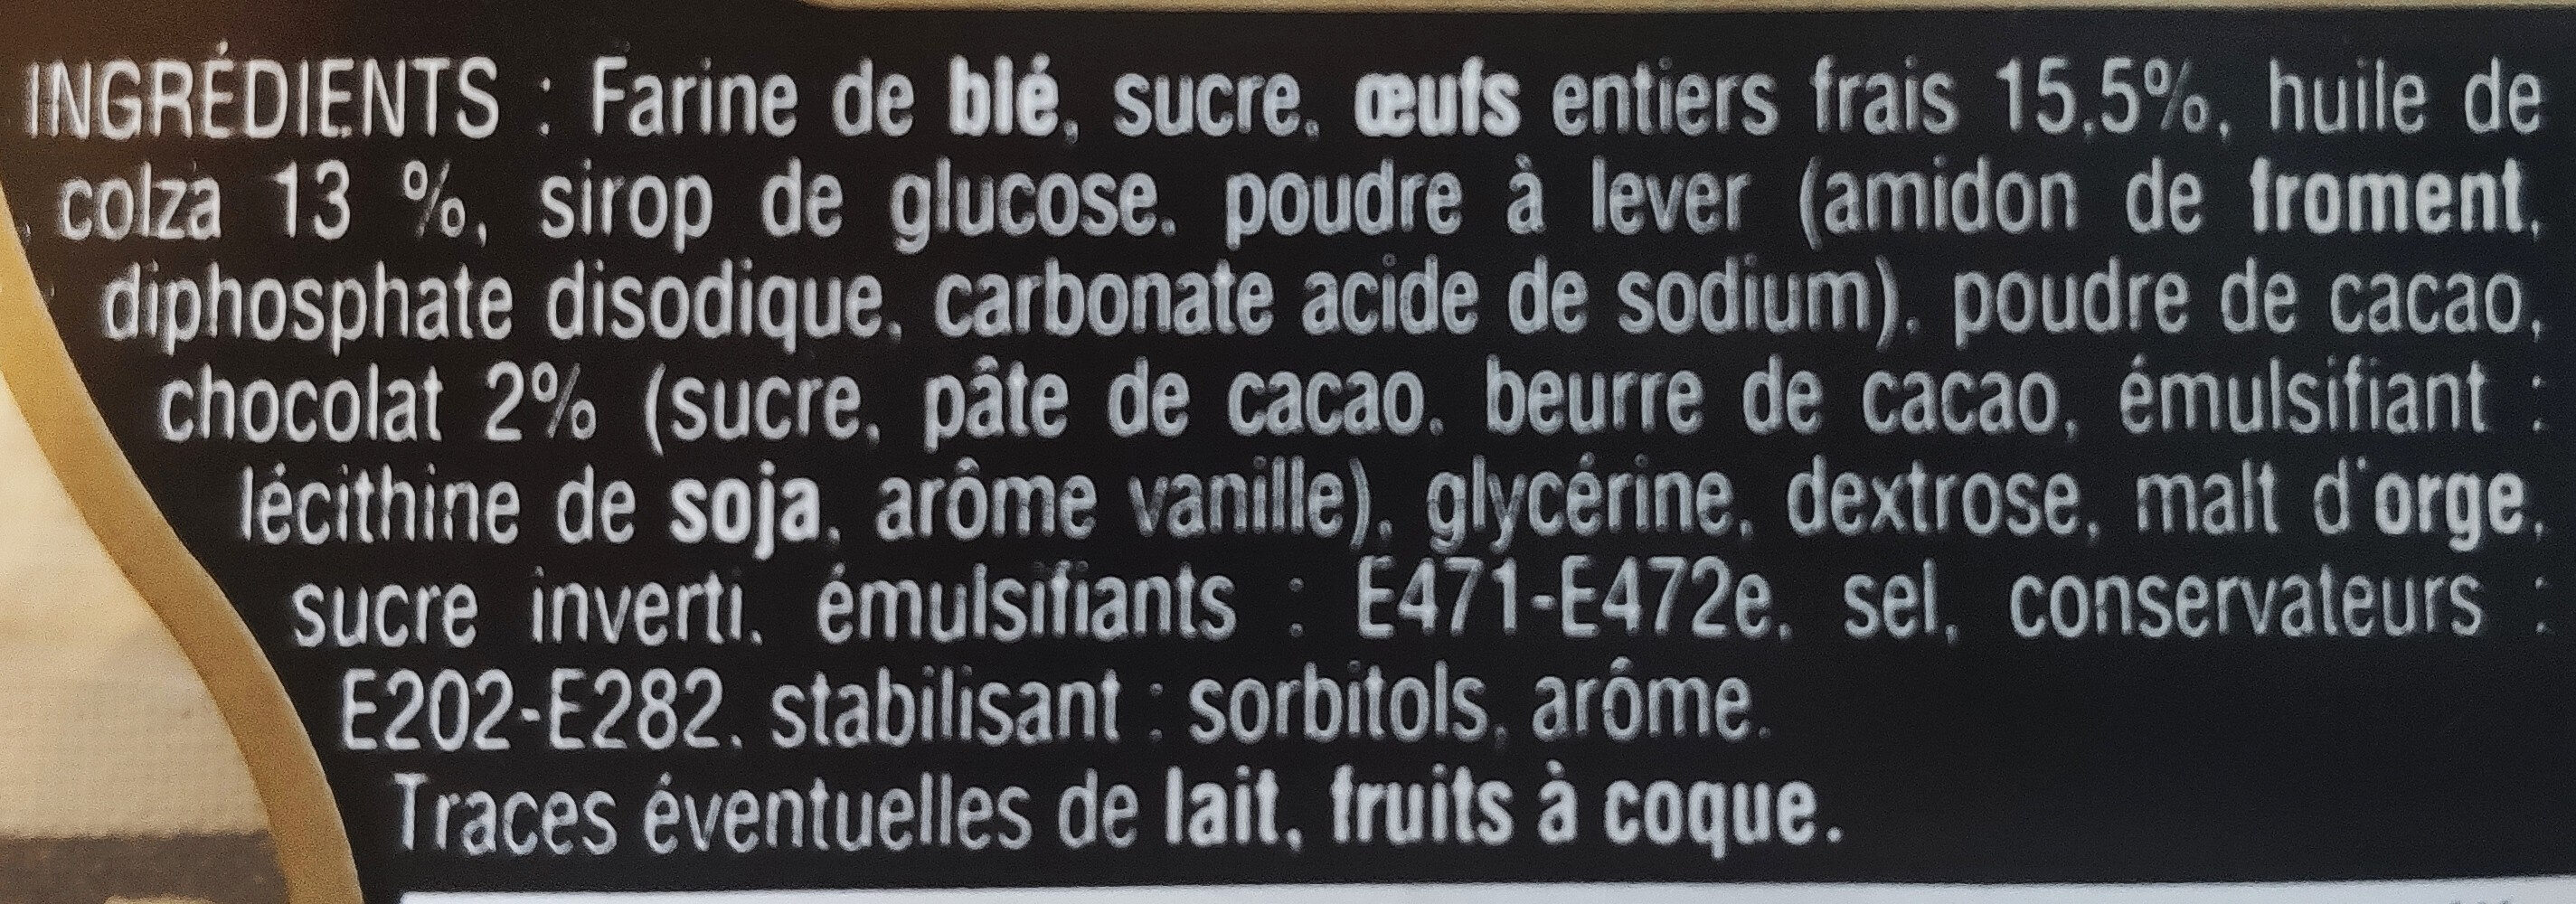 Madeleines au chocolat - Ingredients - fr